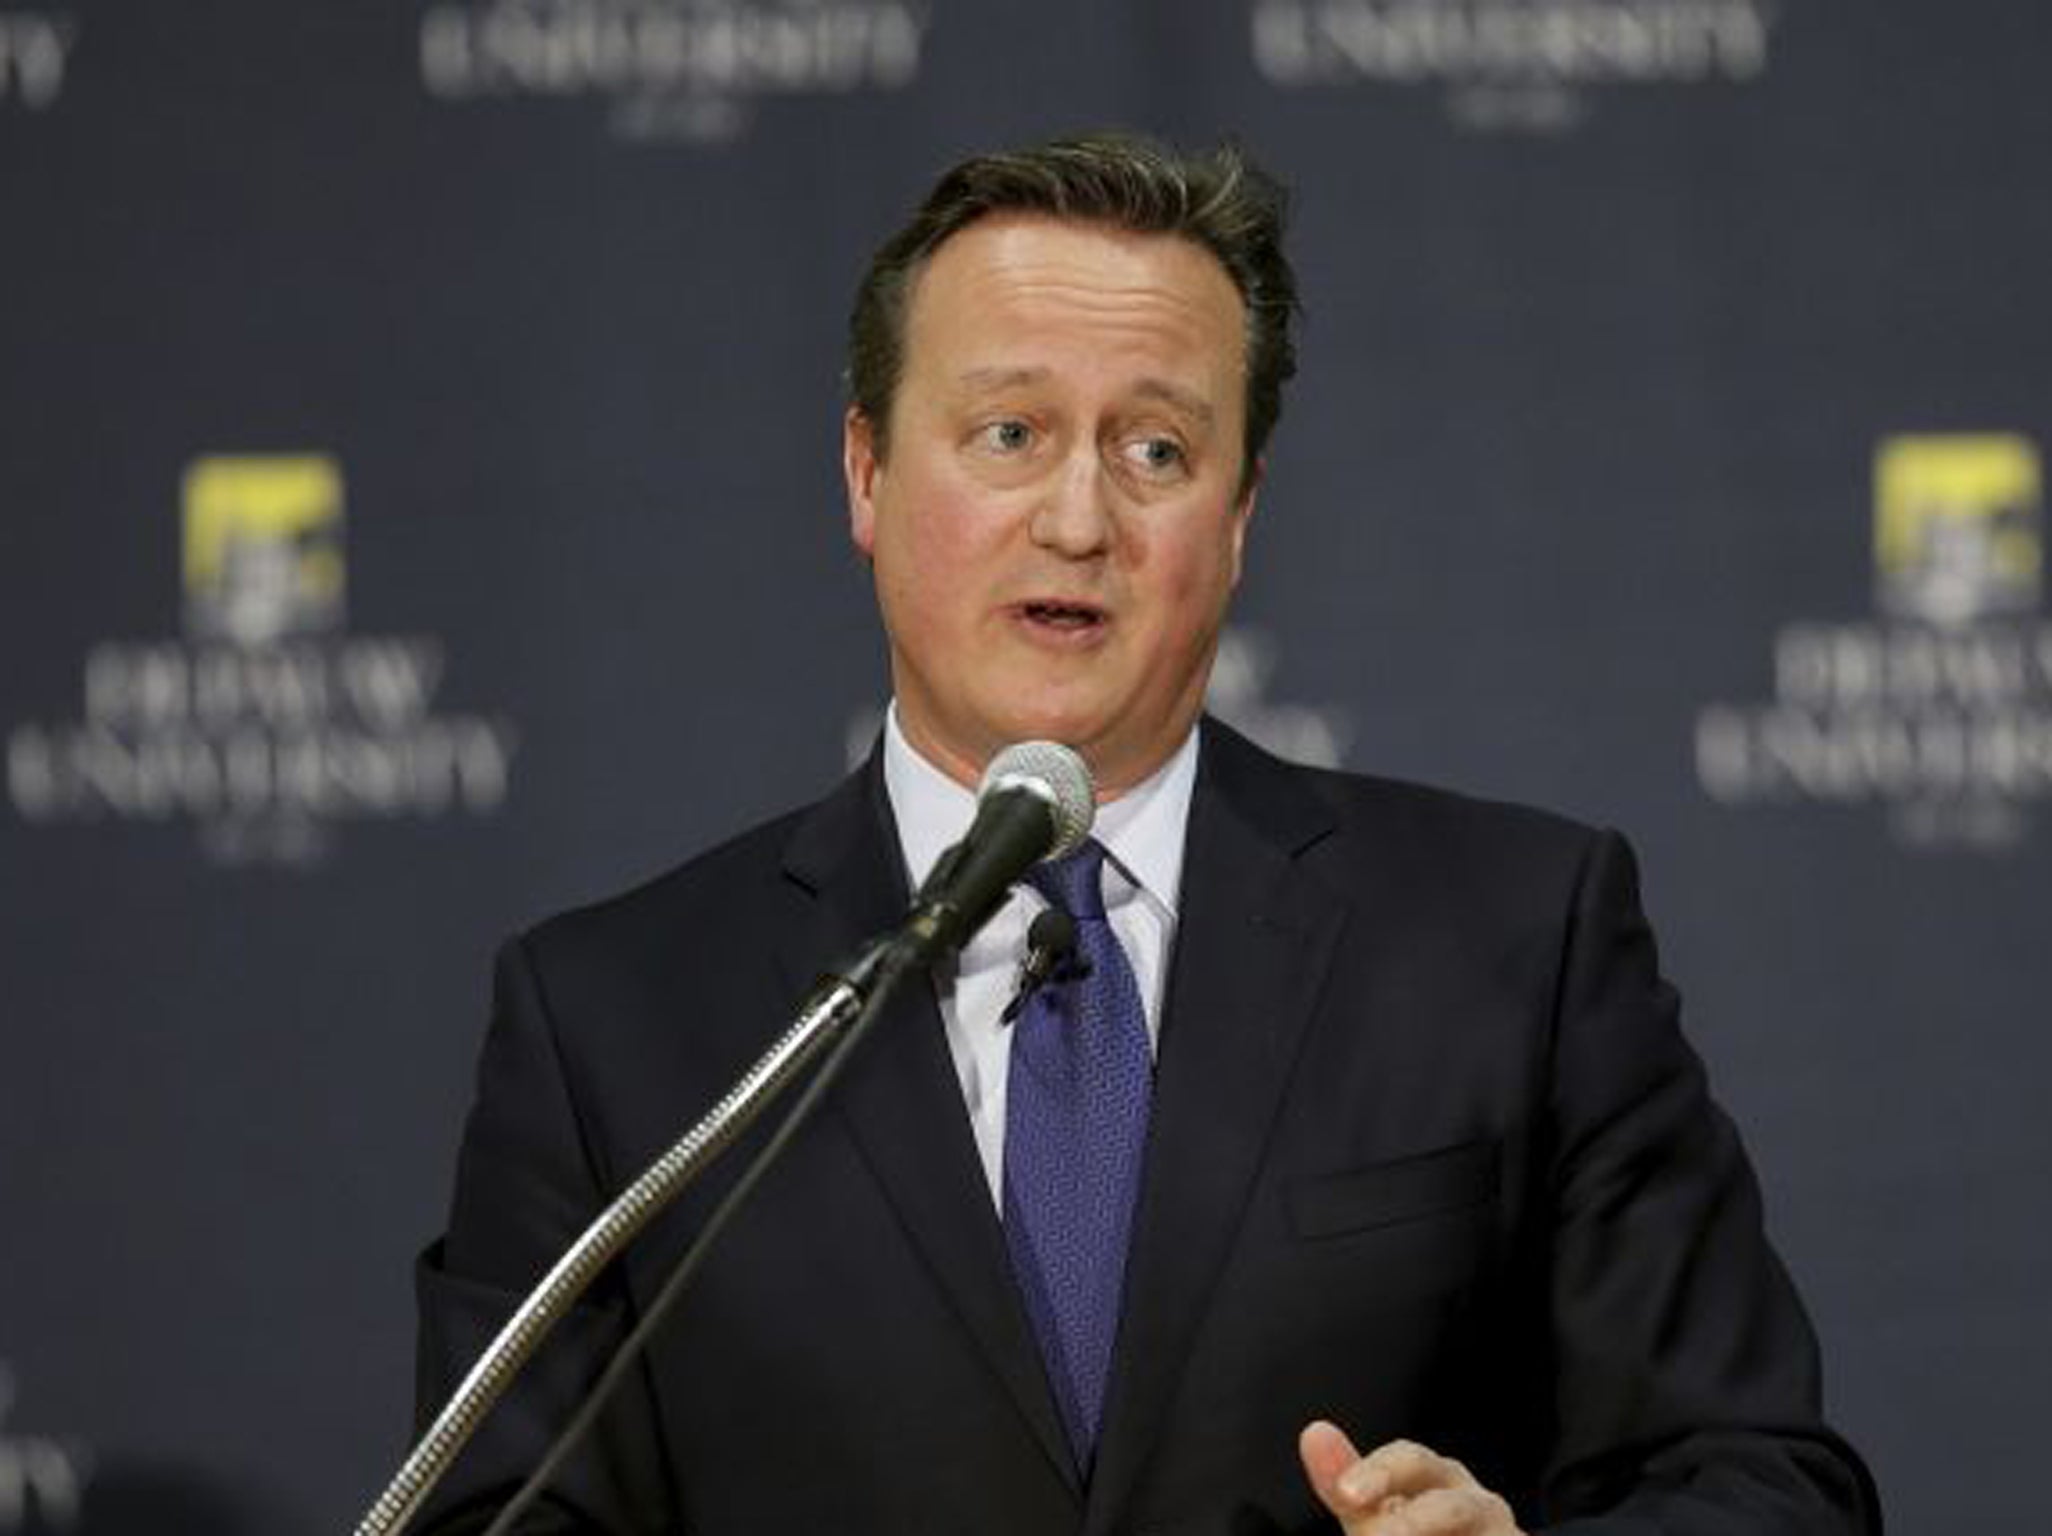 David Cameron, former Prime Minister of the United Kingdom, speaks at DePauw University